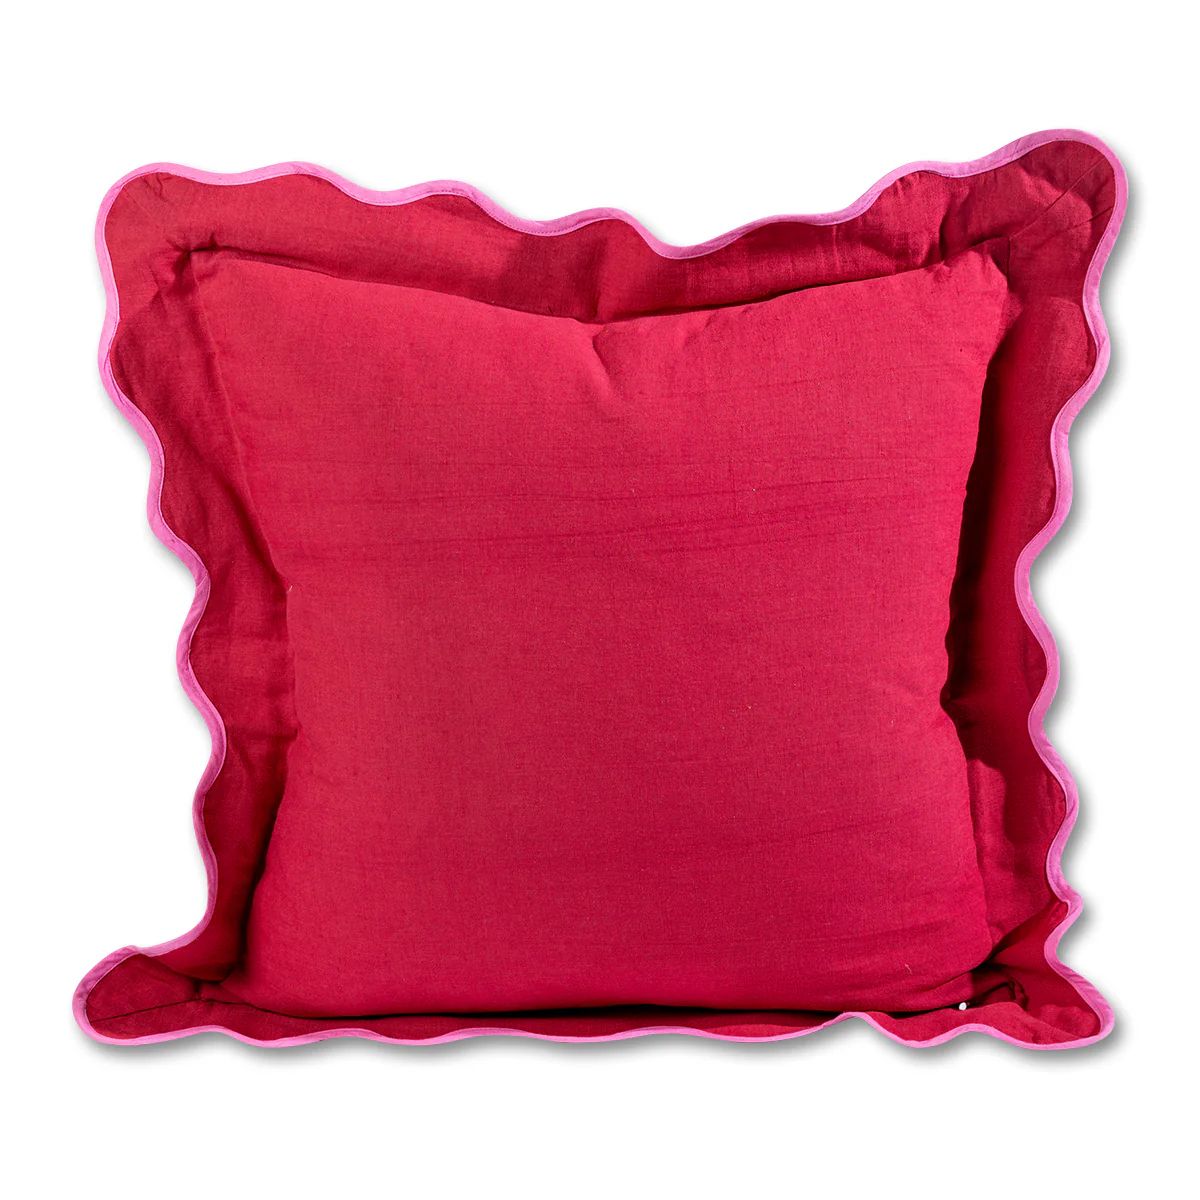 Furbish Studio - Darcy Linen Pillow - Wine + Neon Pink | Furbish Studio